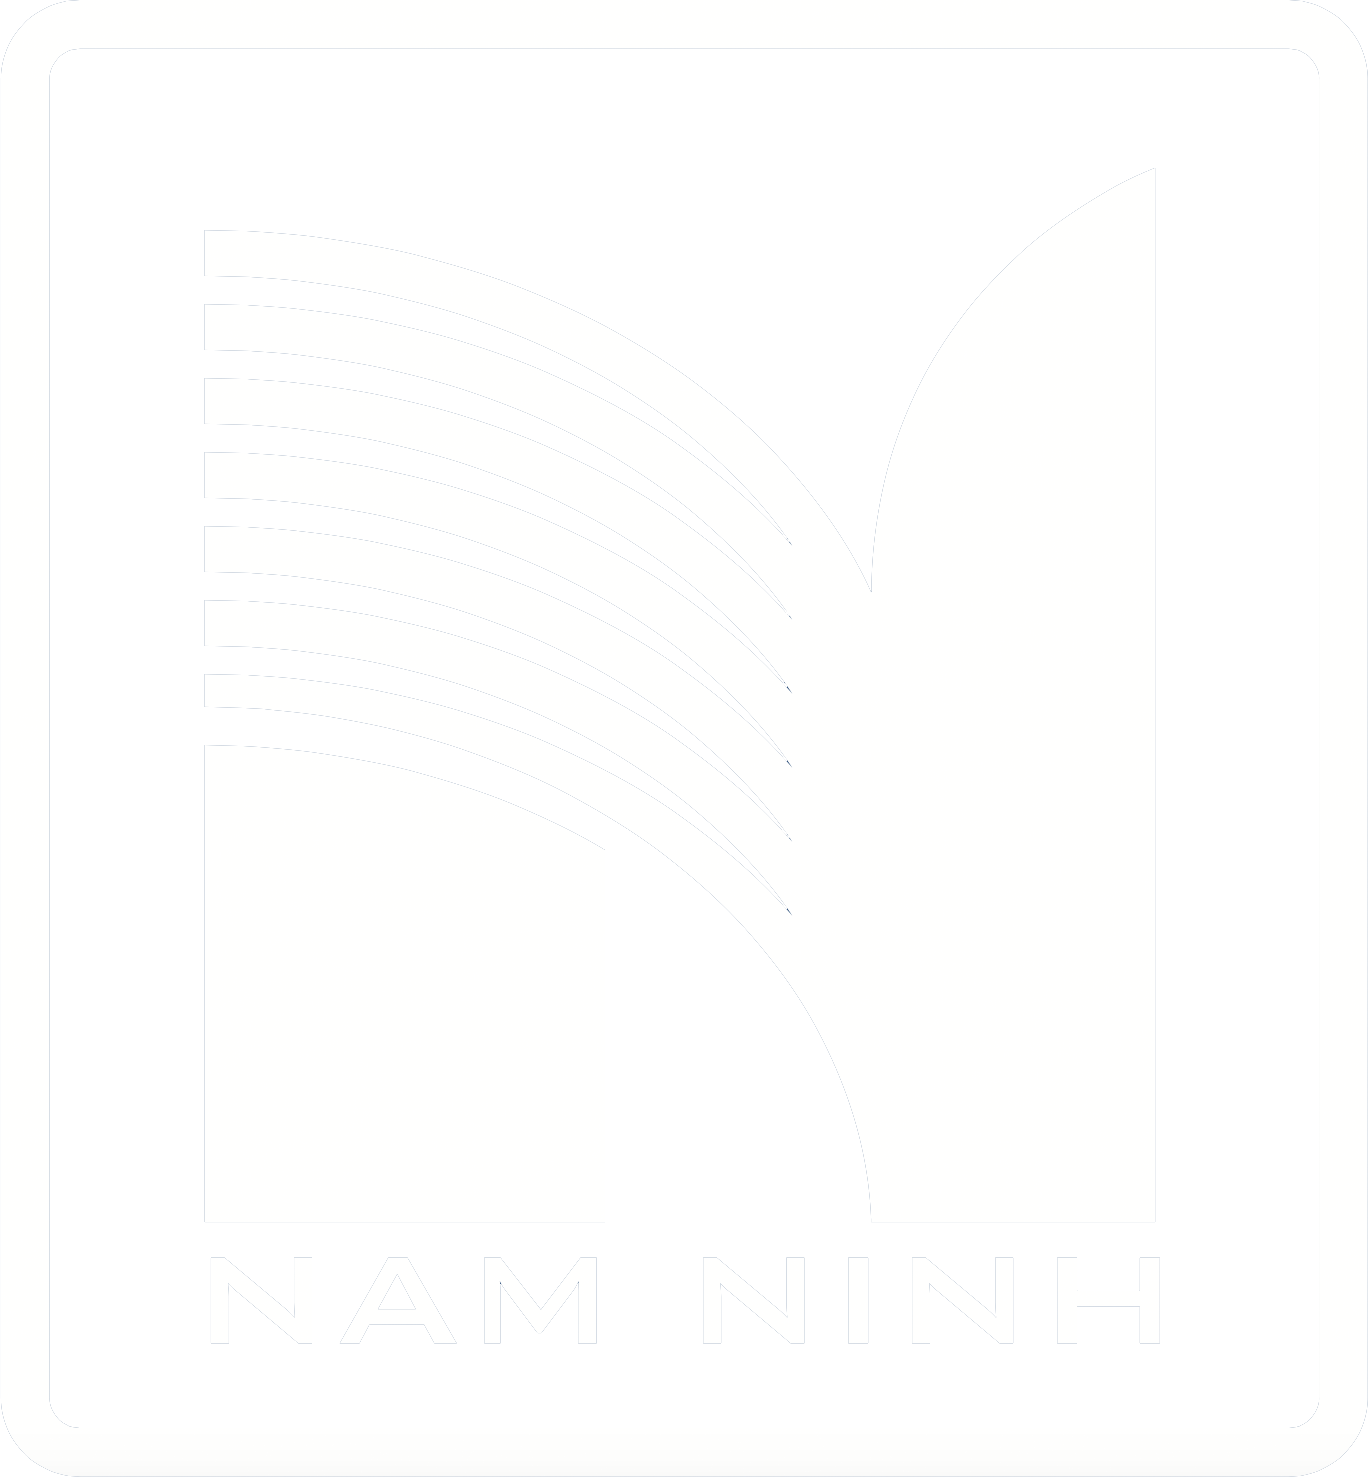 Nam Ninh Co. Ltd